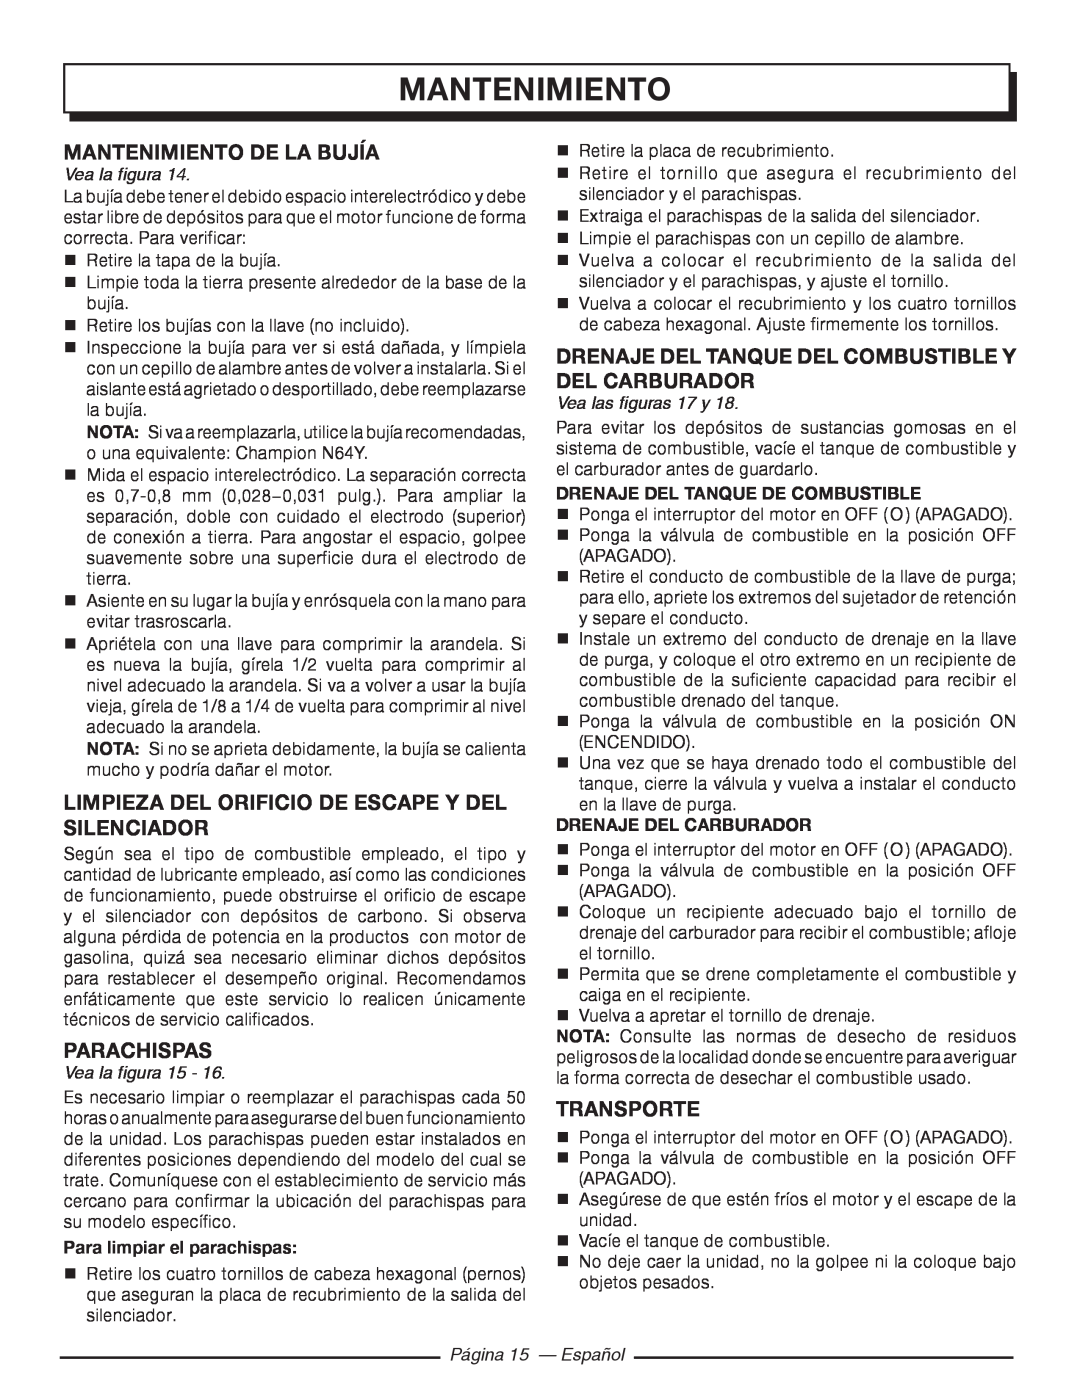 Homelite HG5000 manuel dutilisation mantenimiento, Vea la figura 15, Vea las figuras 17 y, Página 15 — Español 